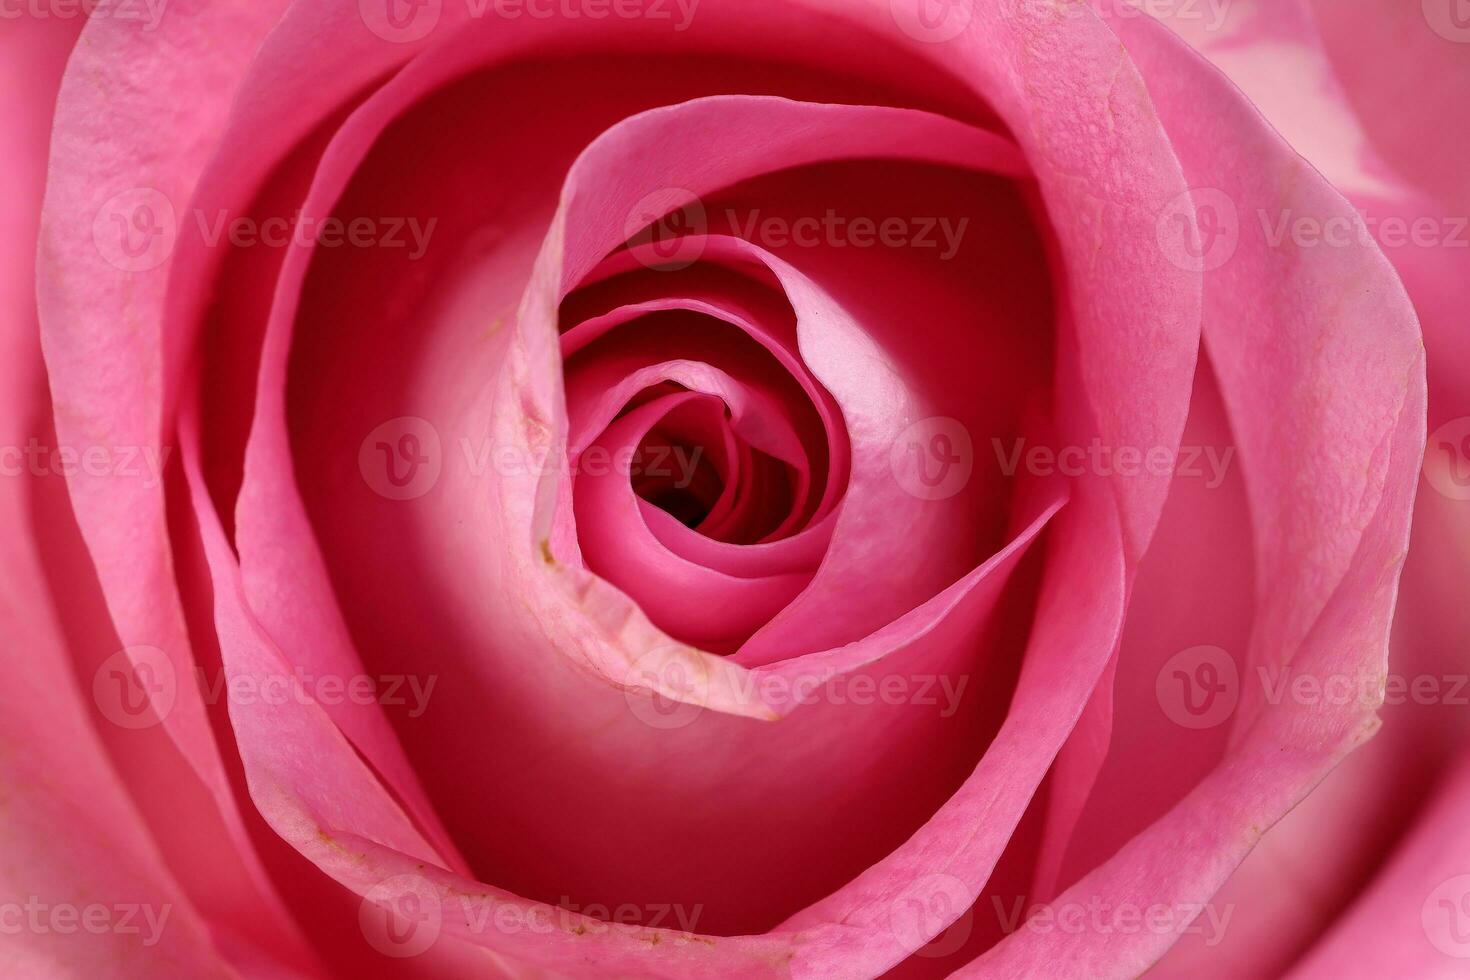 Rosa rosa flor fechar-se macro pétalas círculo foto